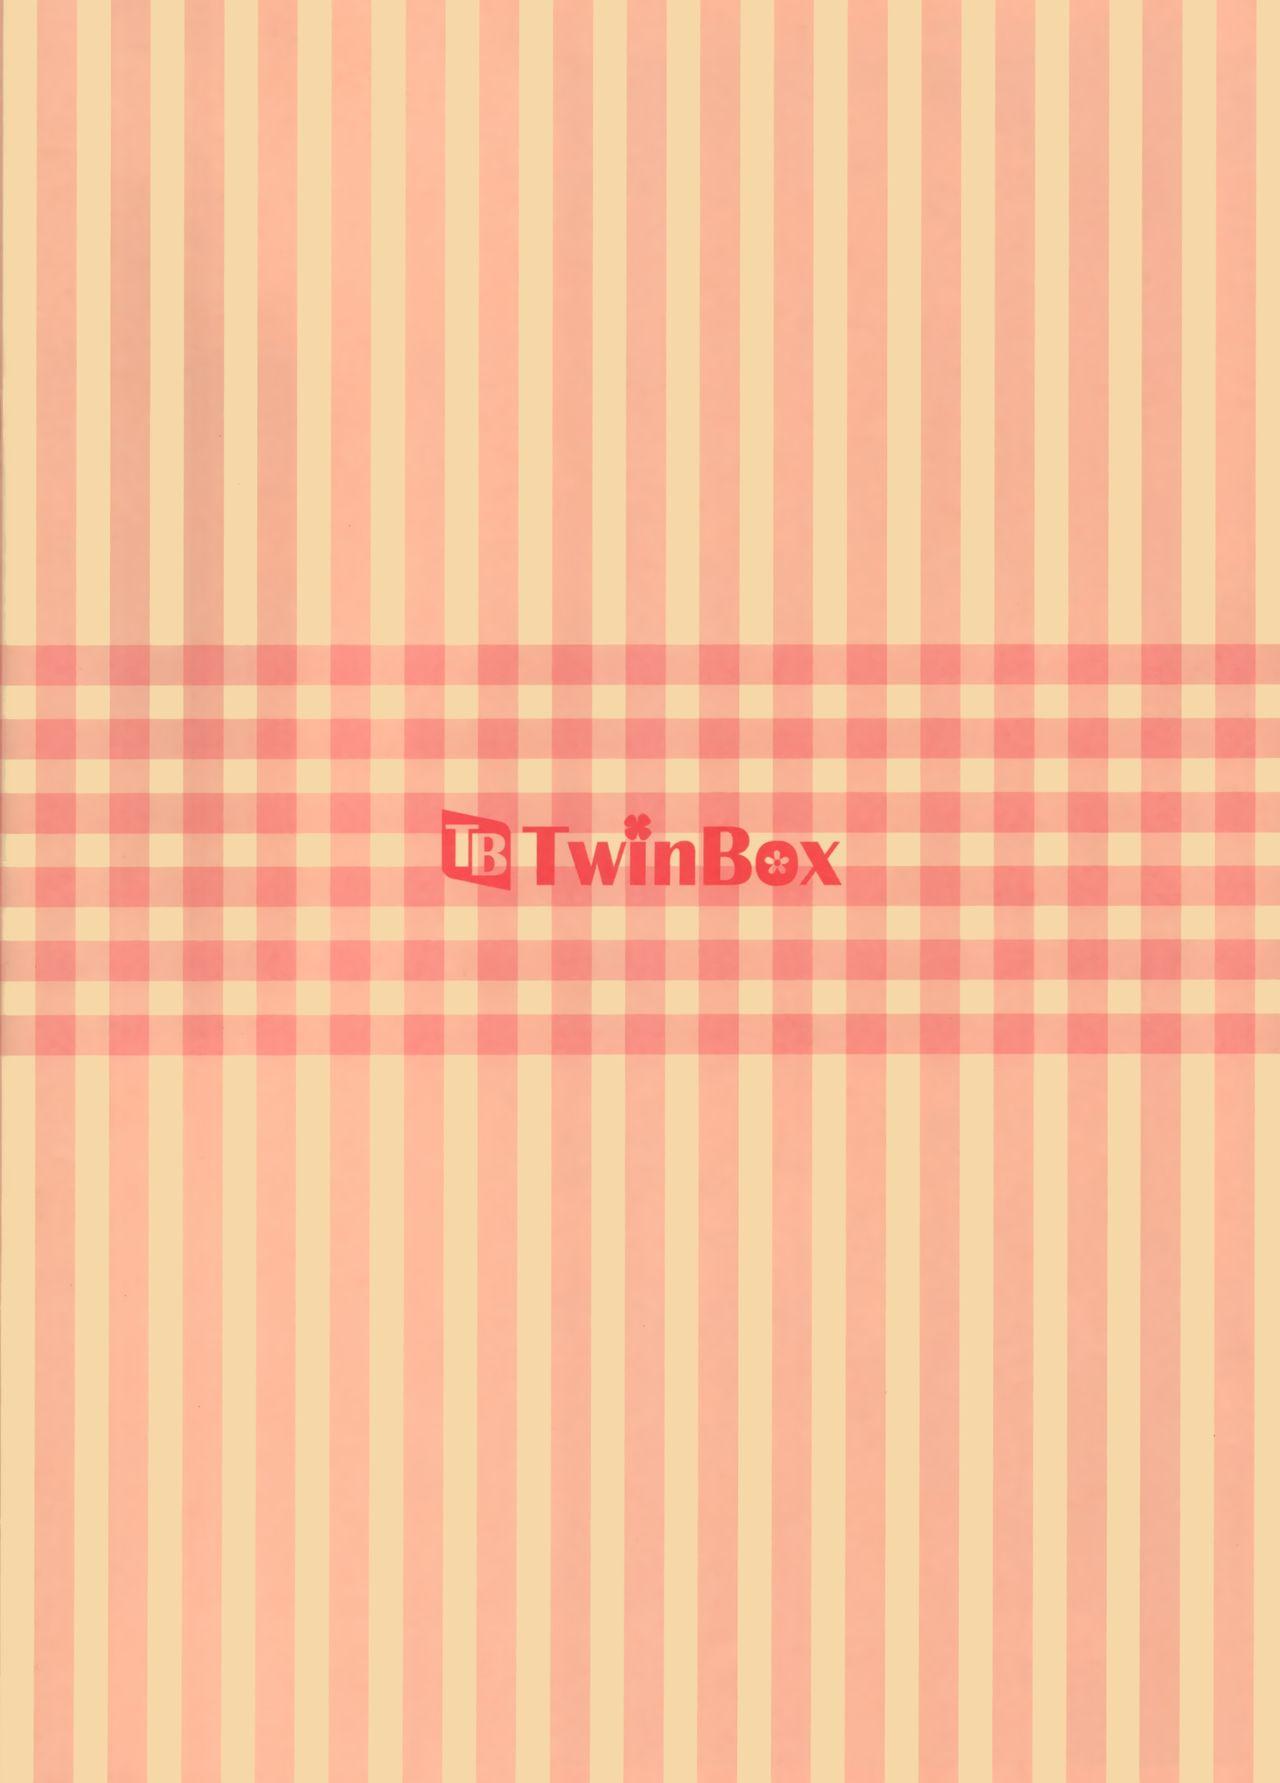 TwinBOOKs 08 10